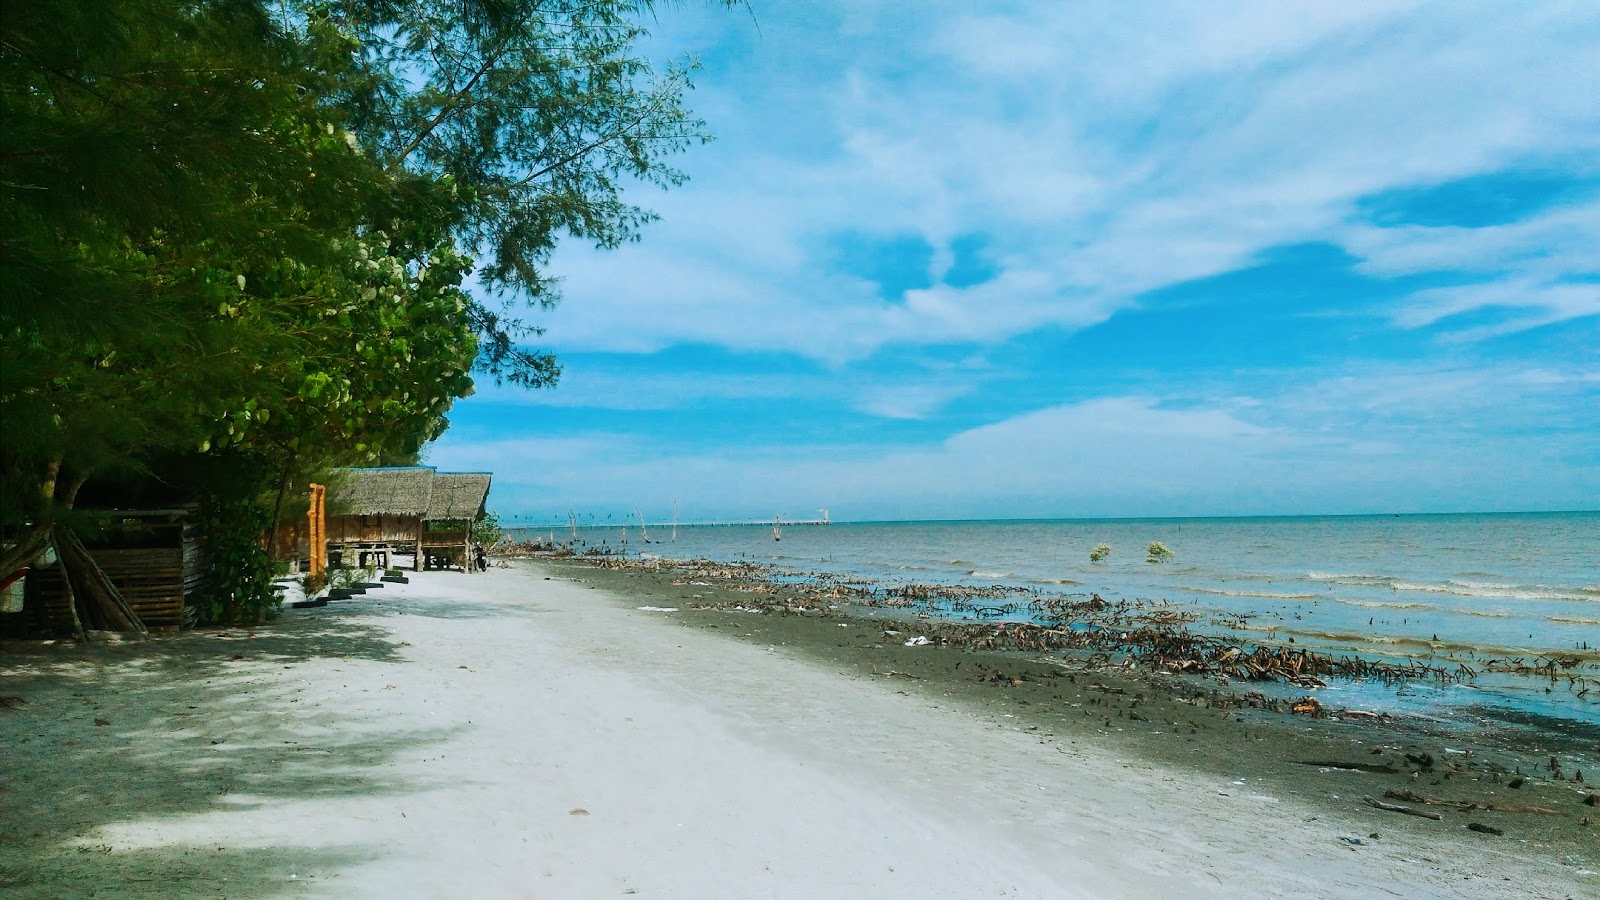 Photo of Tanjung Sepat Beach with spacious shore